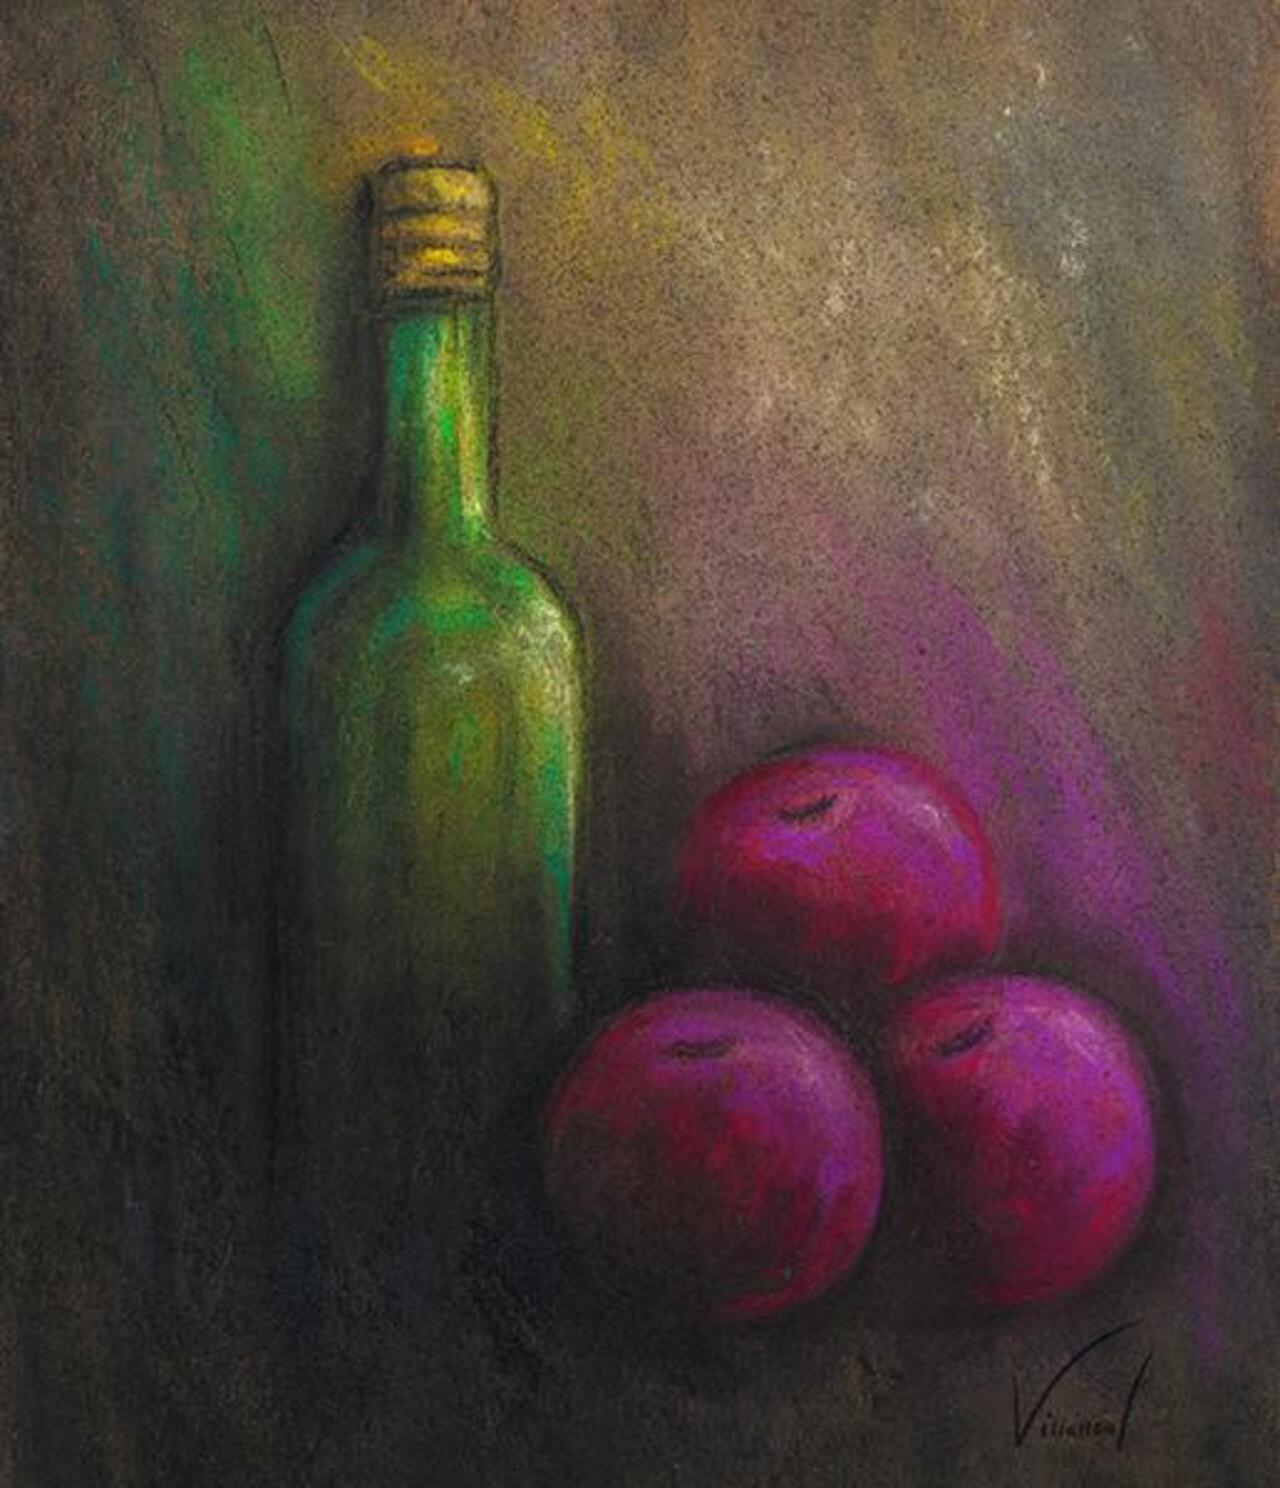 Bodegón, botellas y ciruela con gis al pastel #art #painting #StillLife http://t.co/4tR5kckoK0